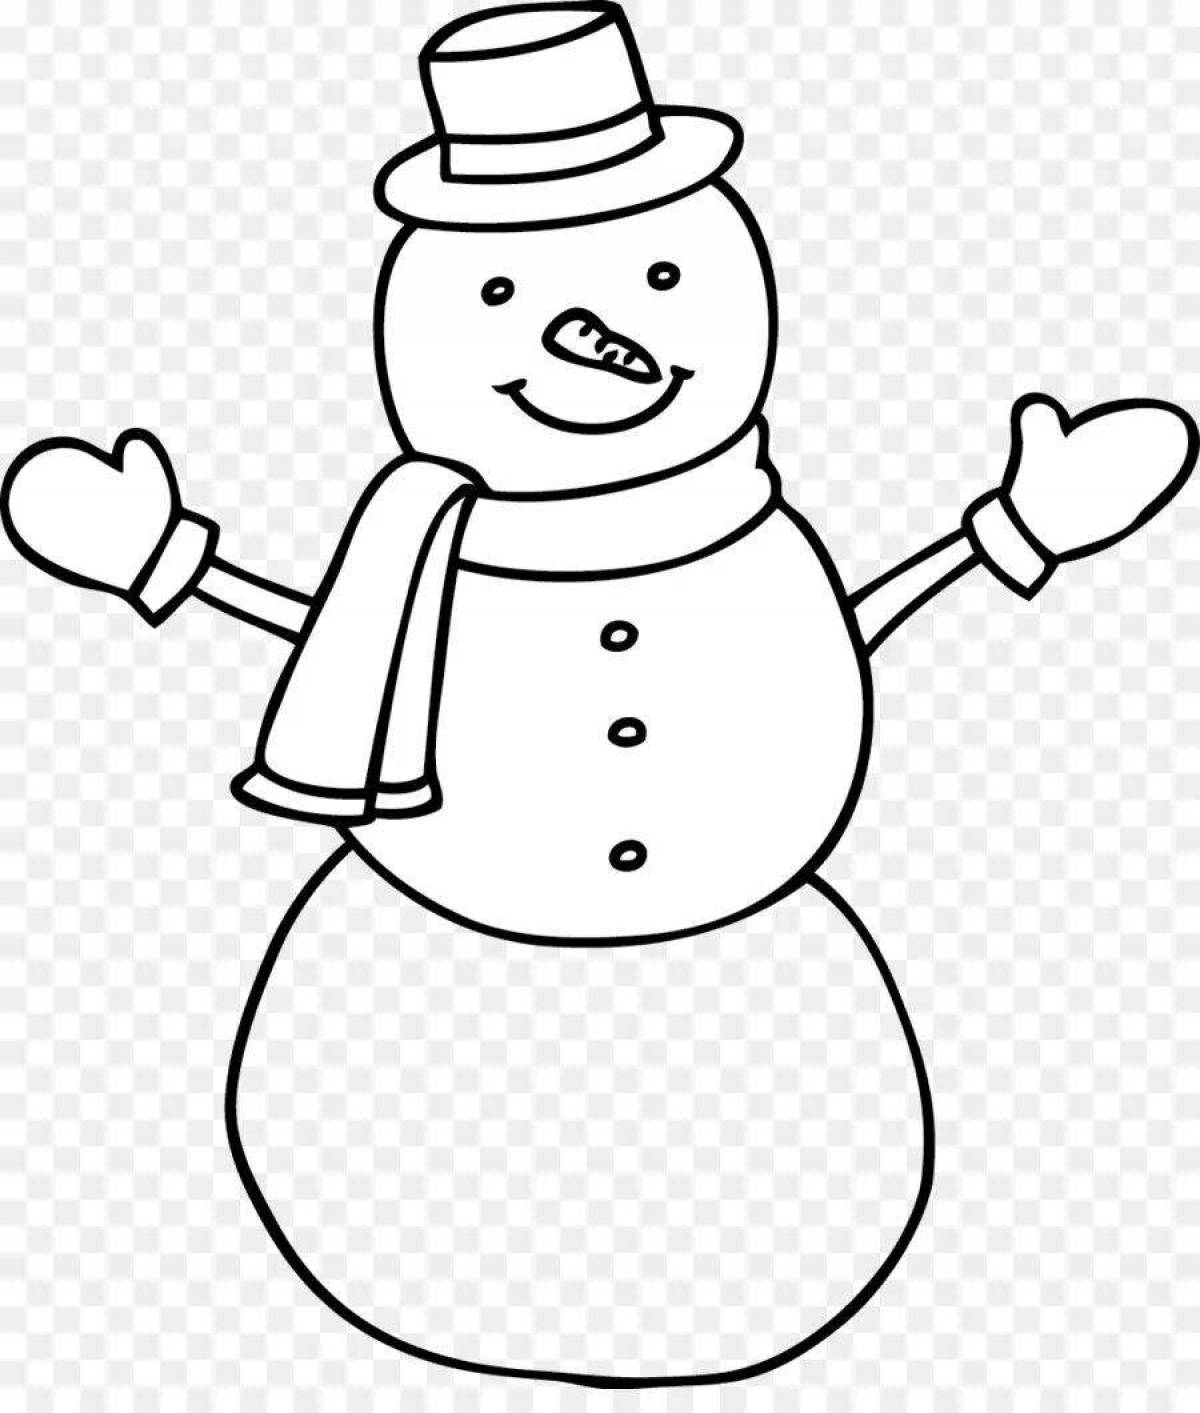 Creative children's coloring snowman